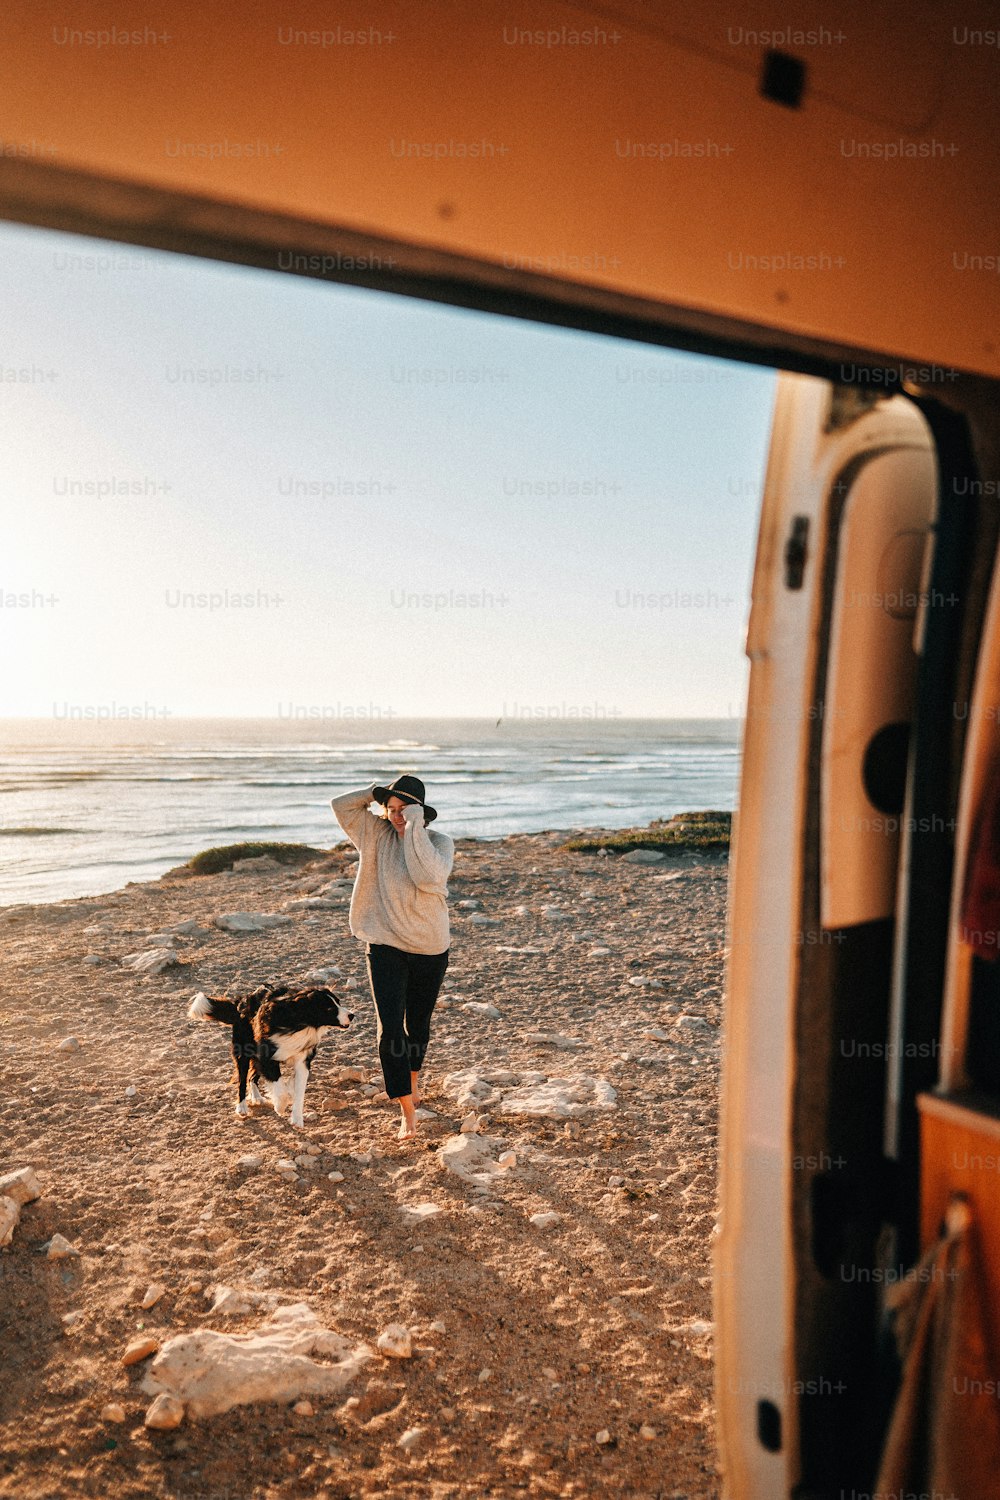 a man walking a dog on a beach next to a van